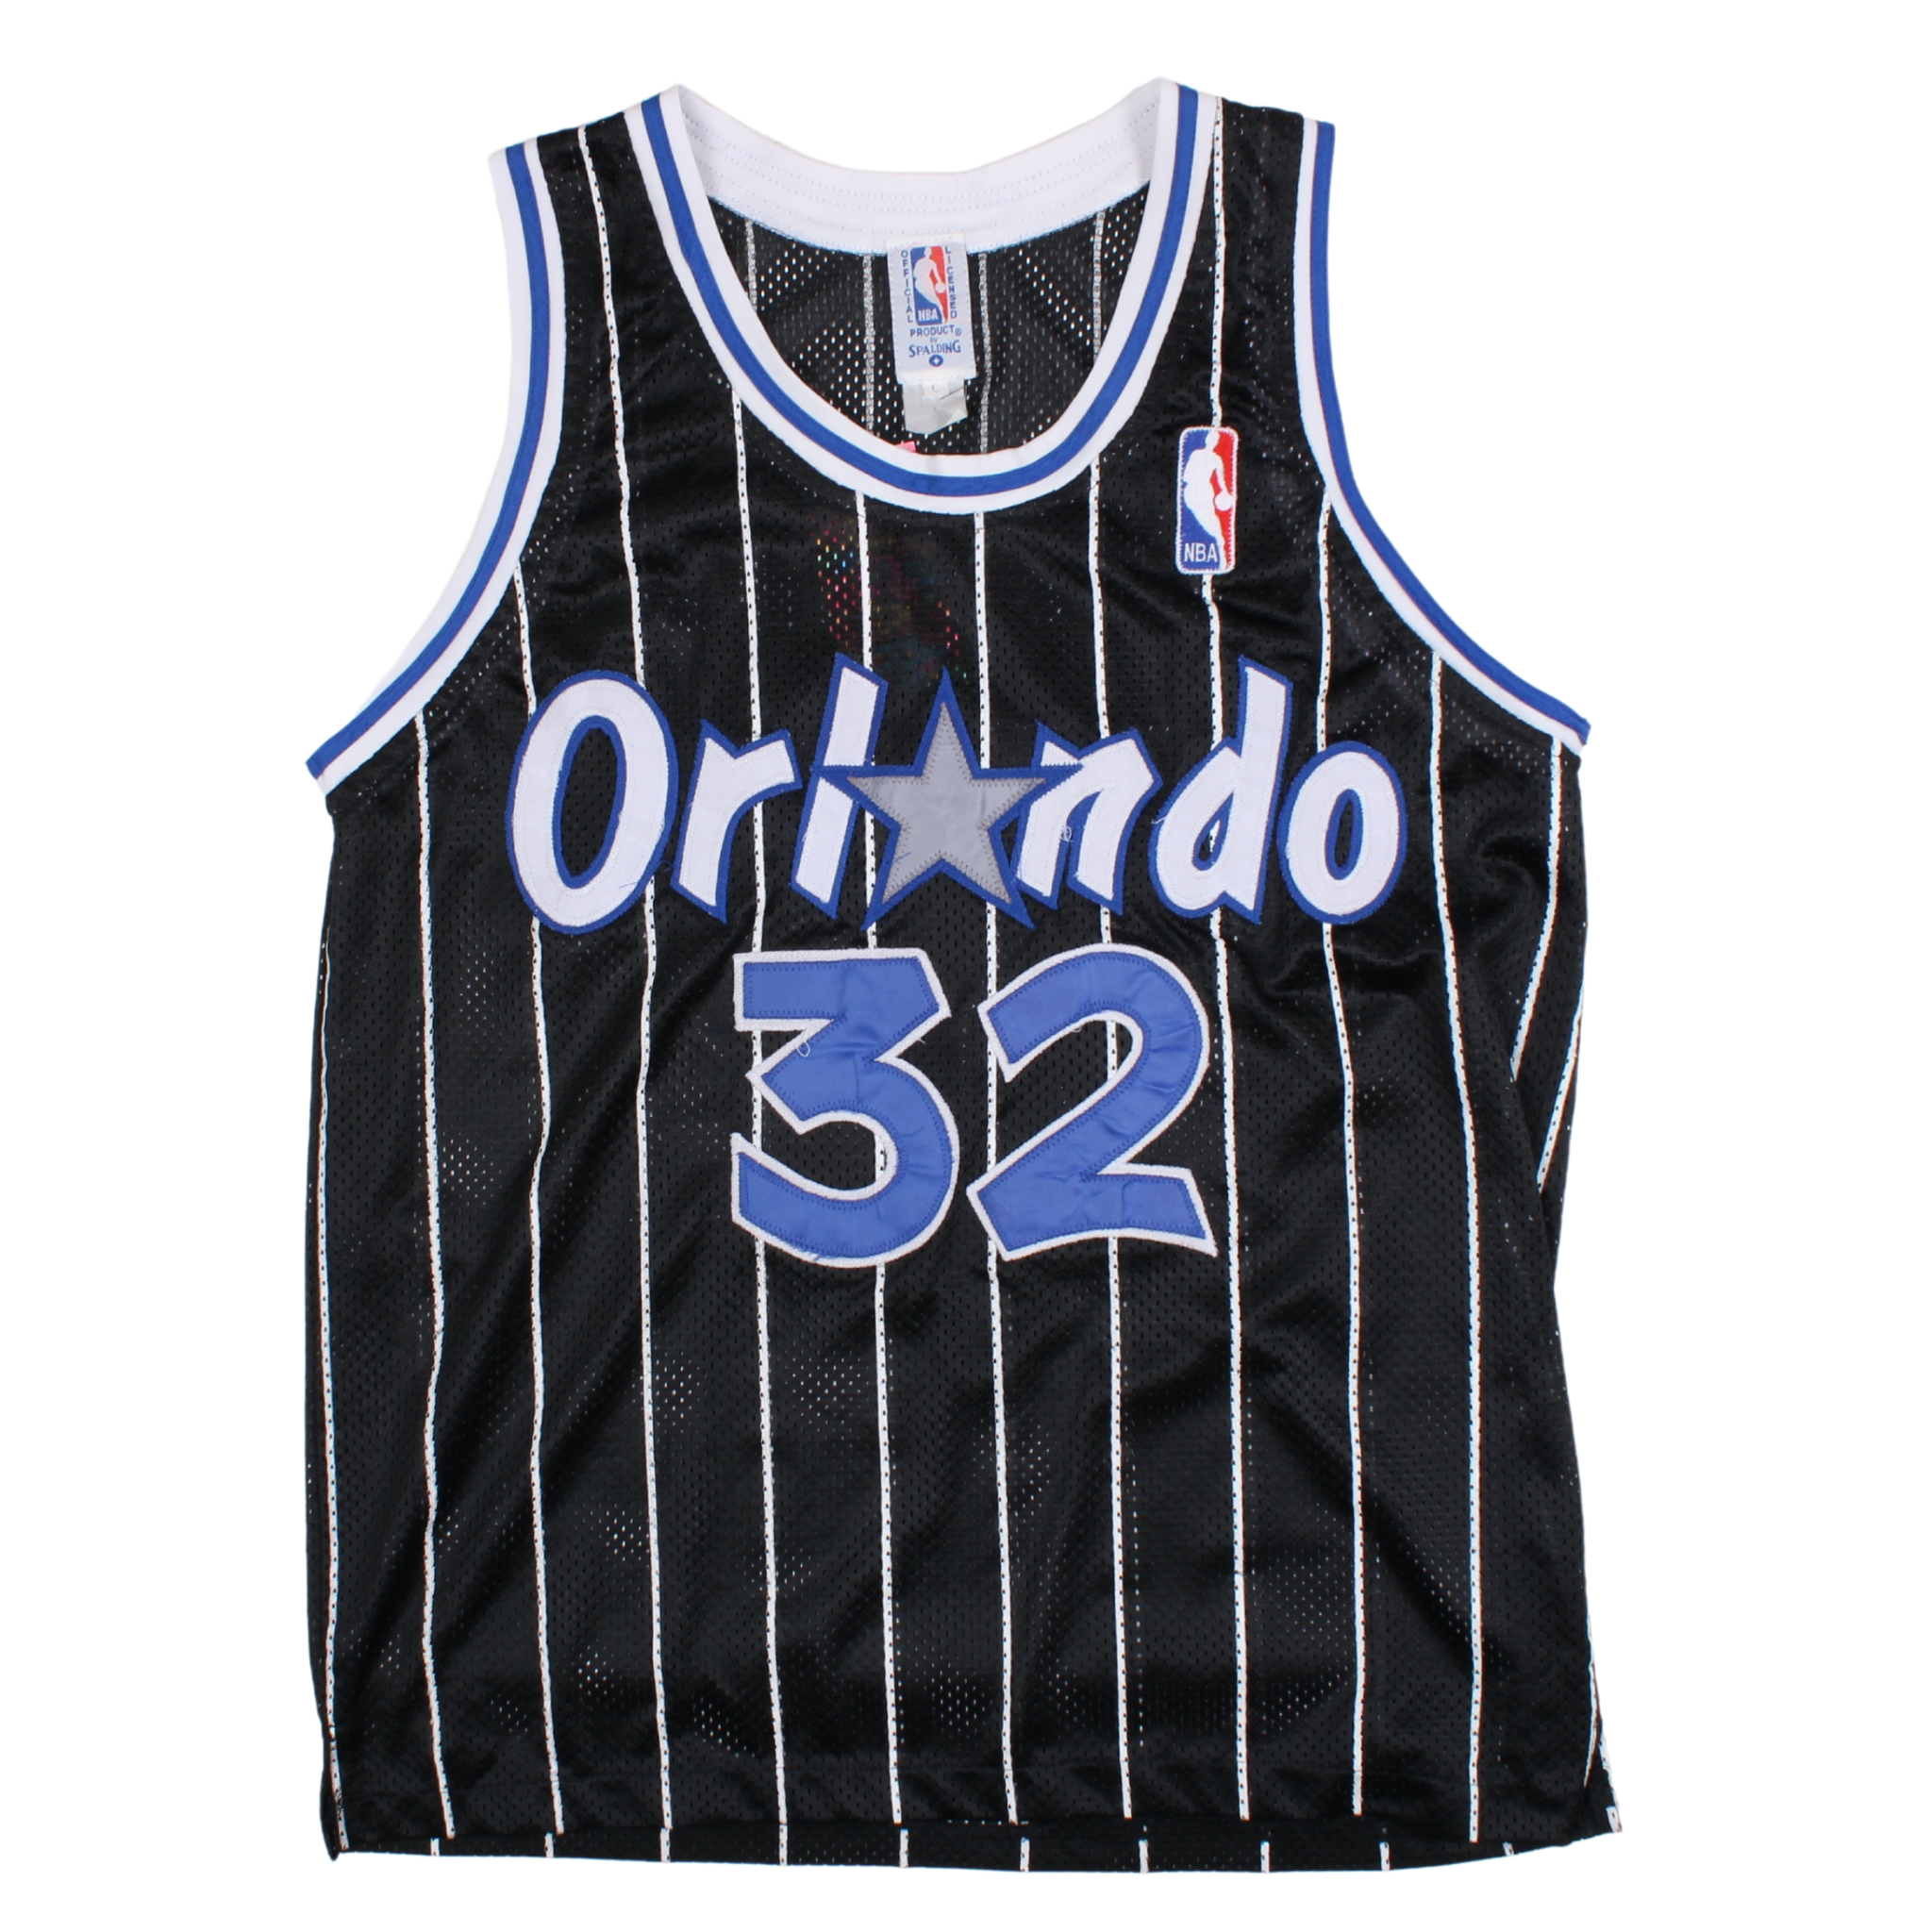 Vintage Spalding Orlando Magic Basketball Vest (M)